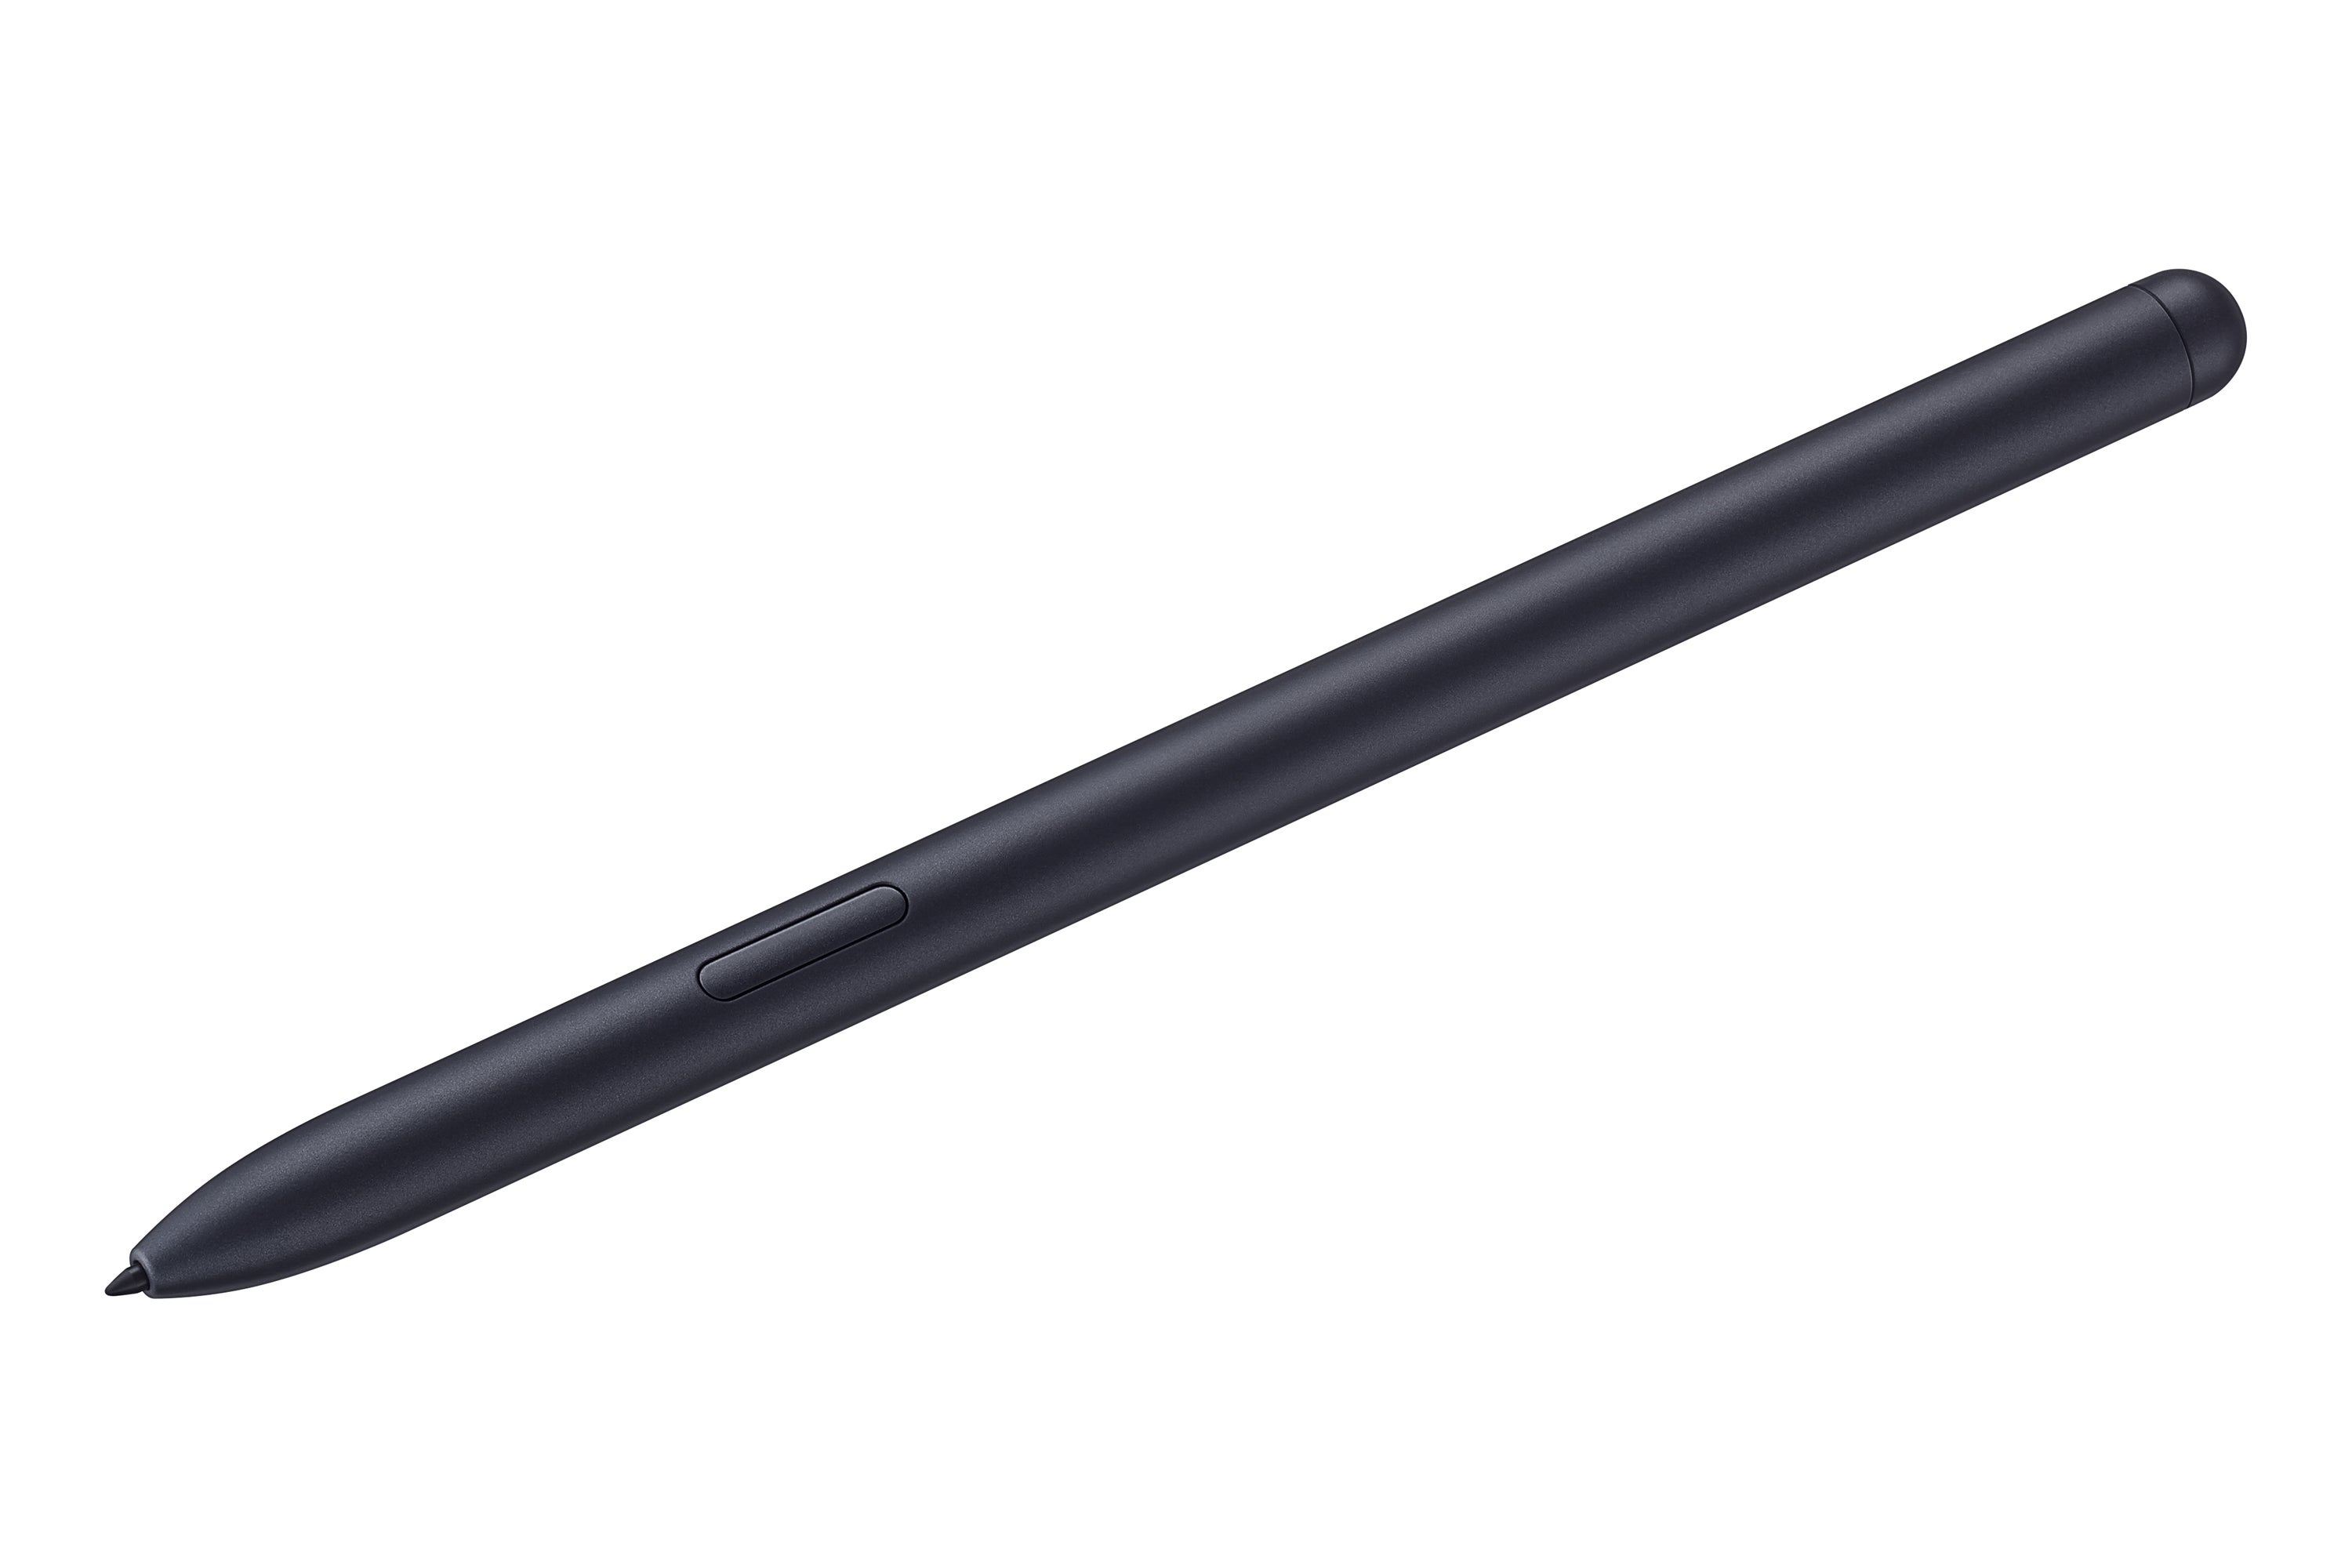 SAMSUNG Galaxy Tab S7 Plus 12.4" 128GB Mystic Black (Wi-Fi) S Pen Included - image 6 of 17